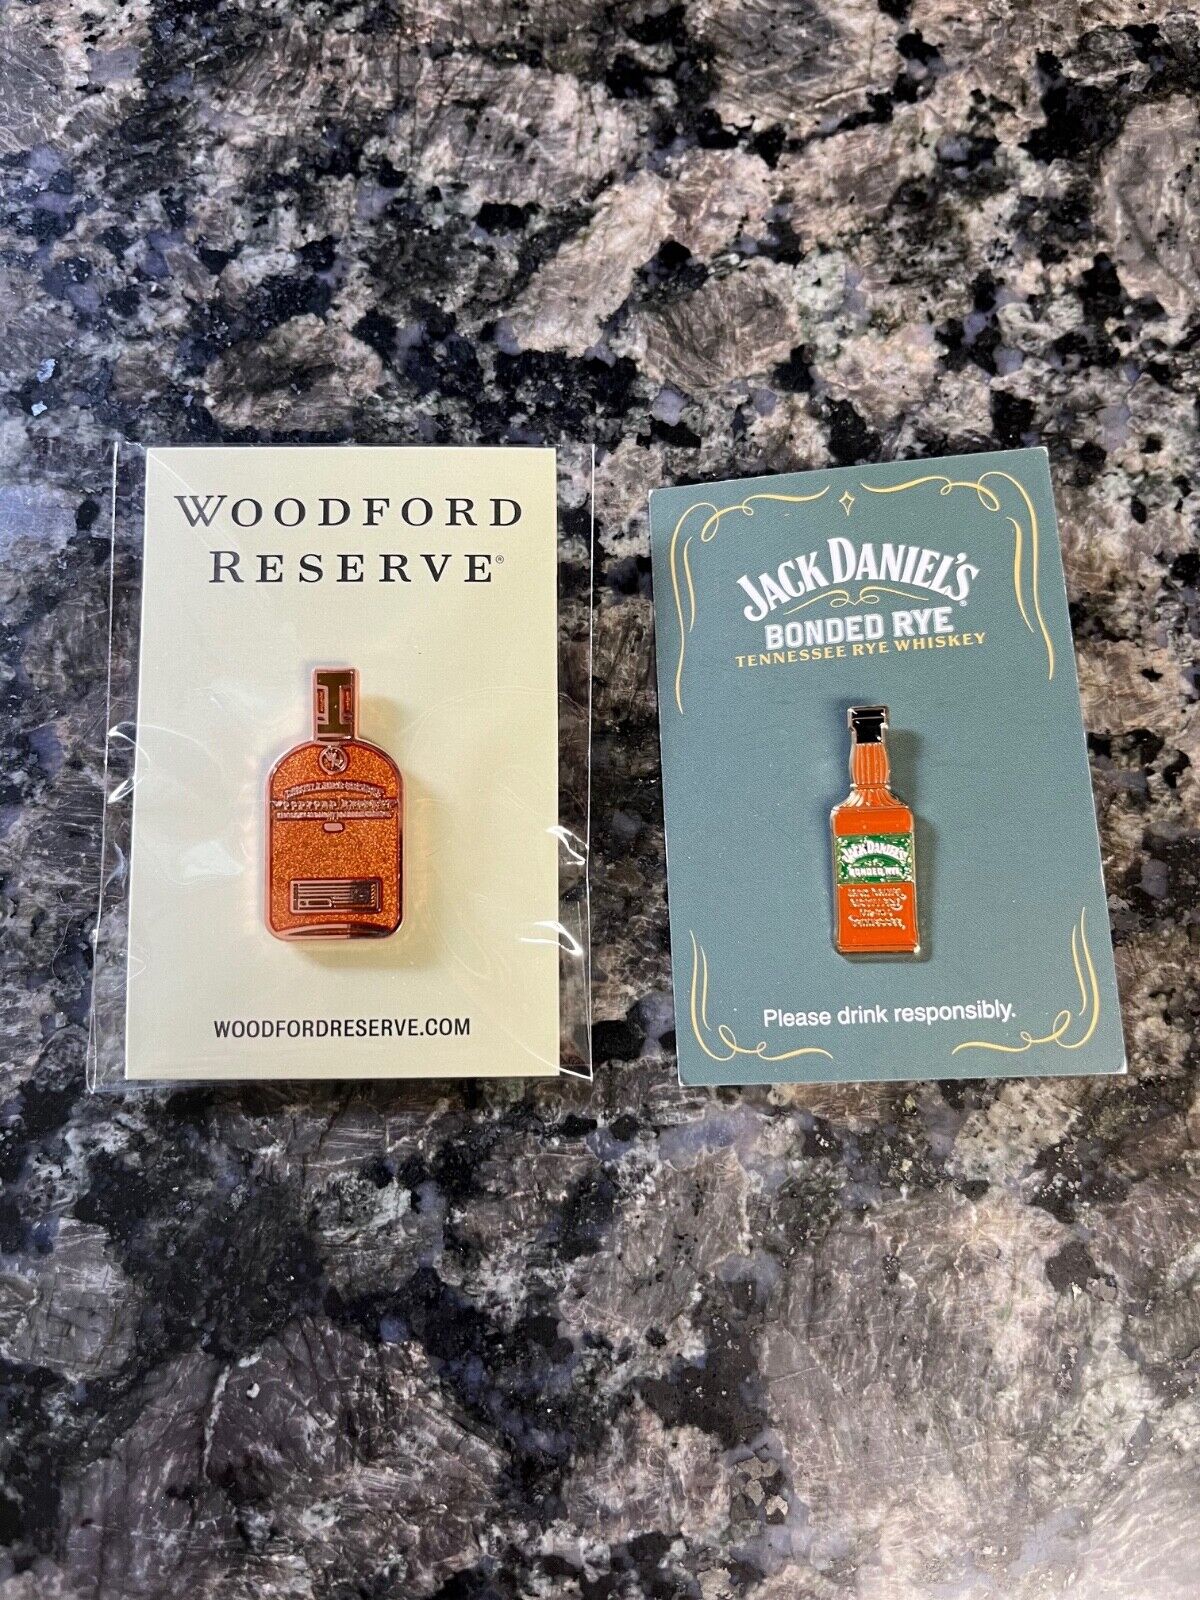 Woodford Reserve Jack Daniels Bonded Rye Kentucky Bourbon Whiskey Enamel Pins